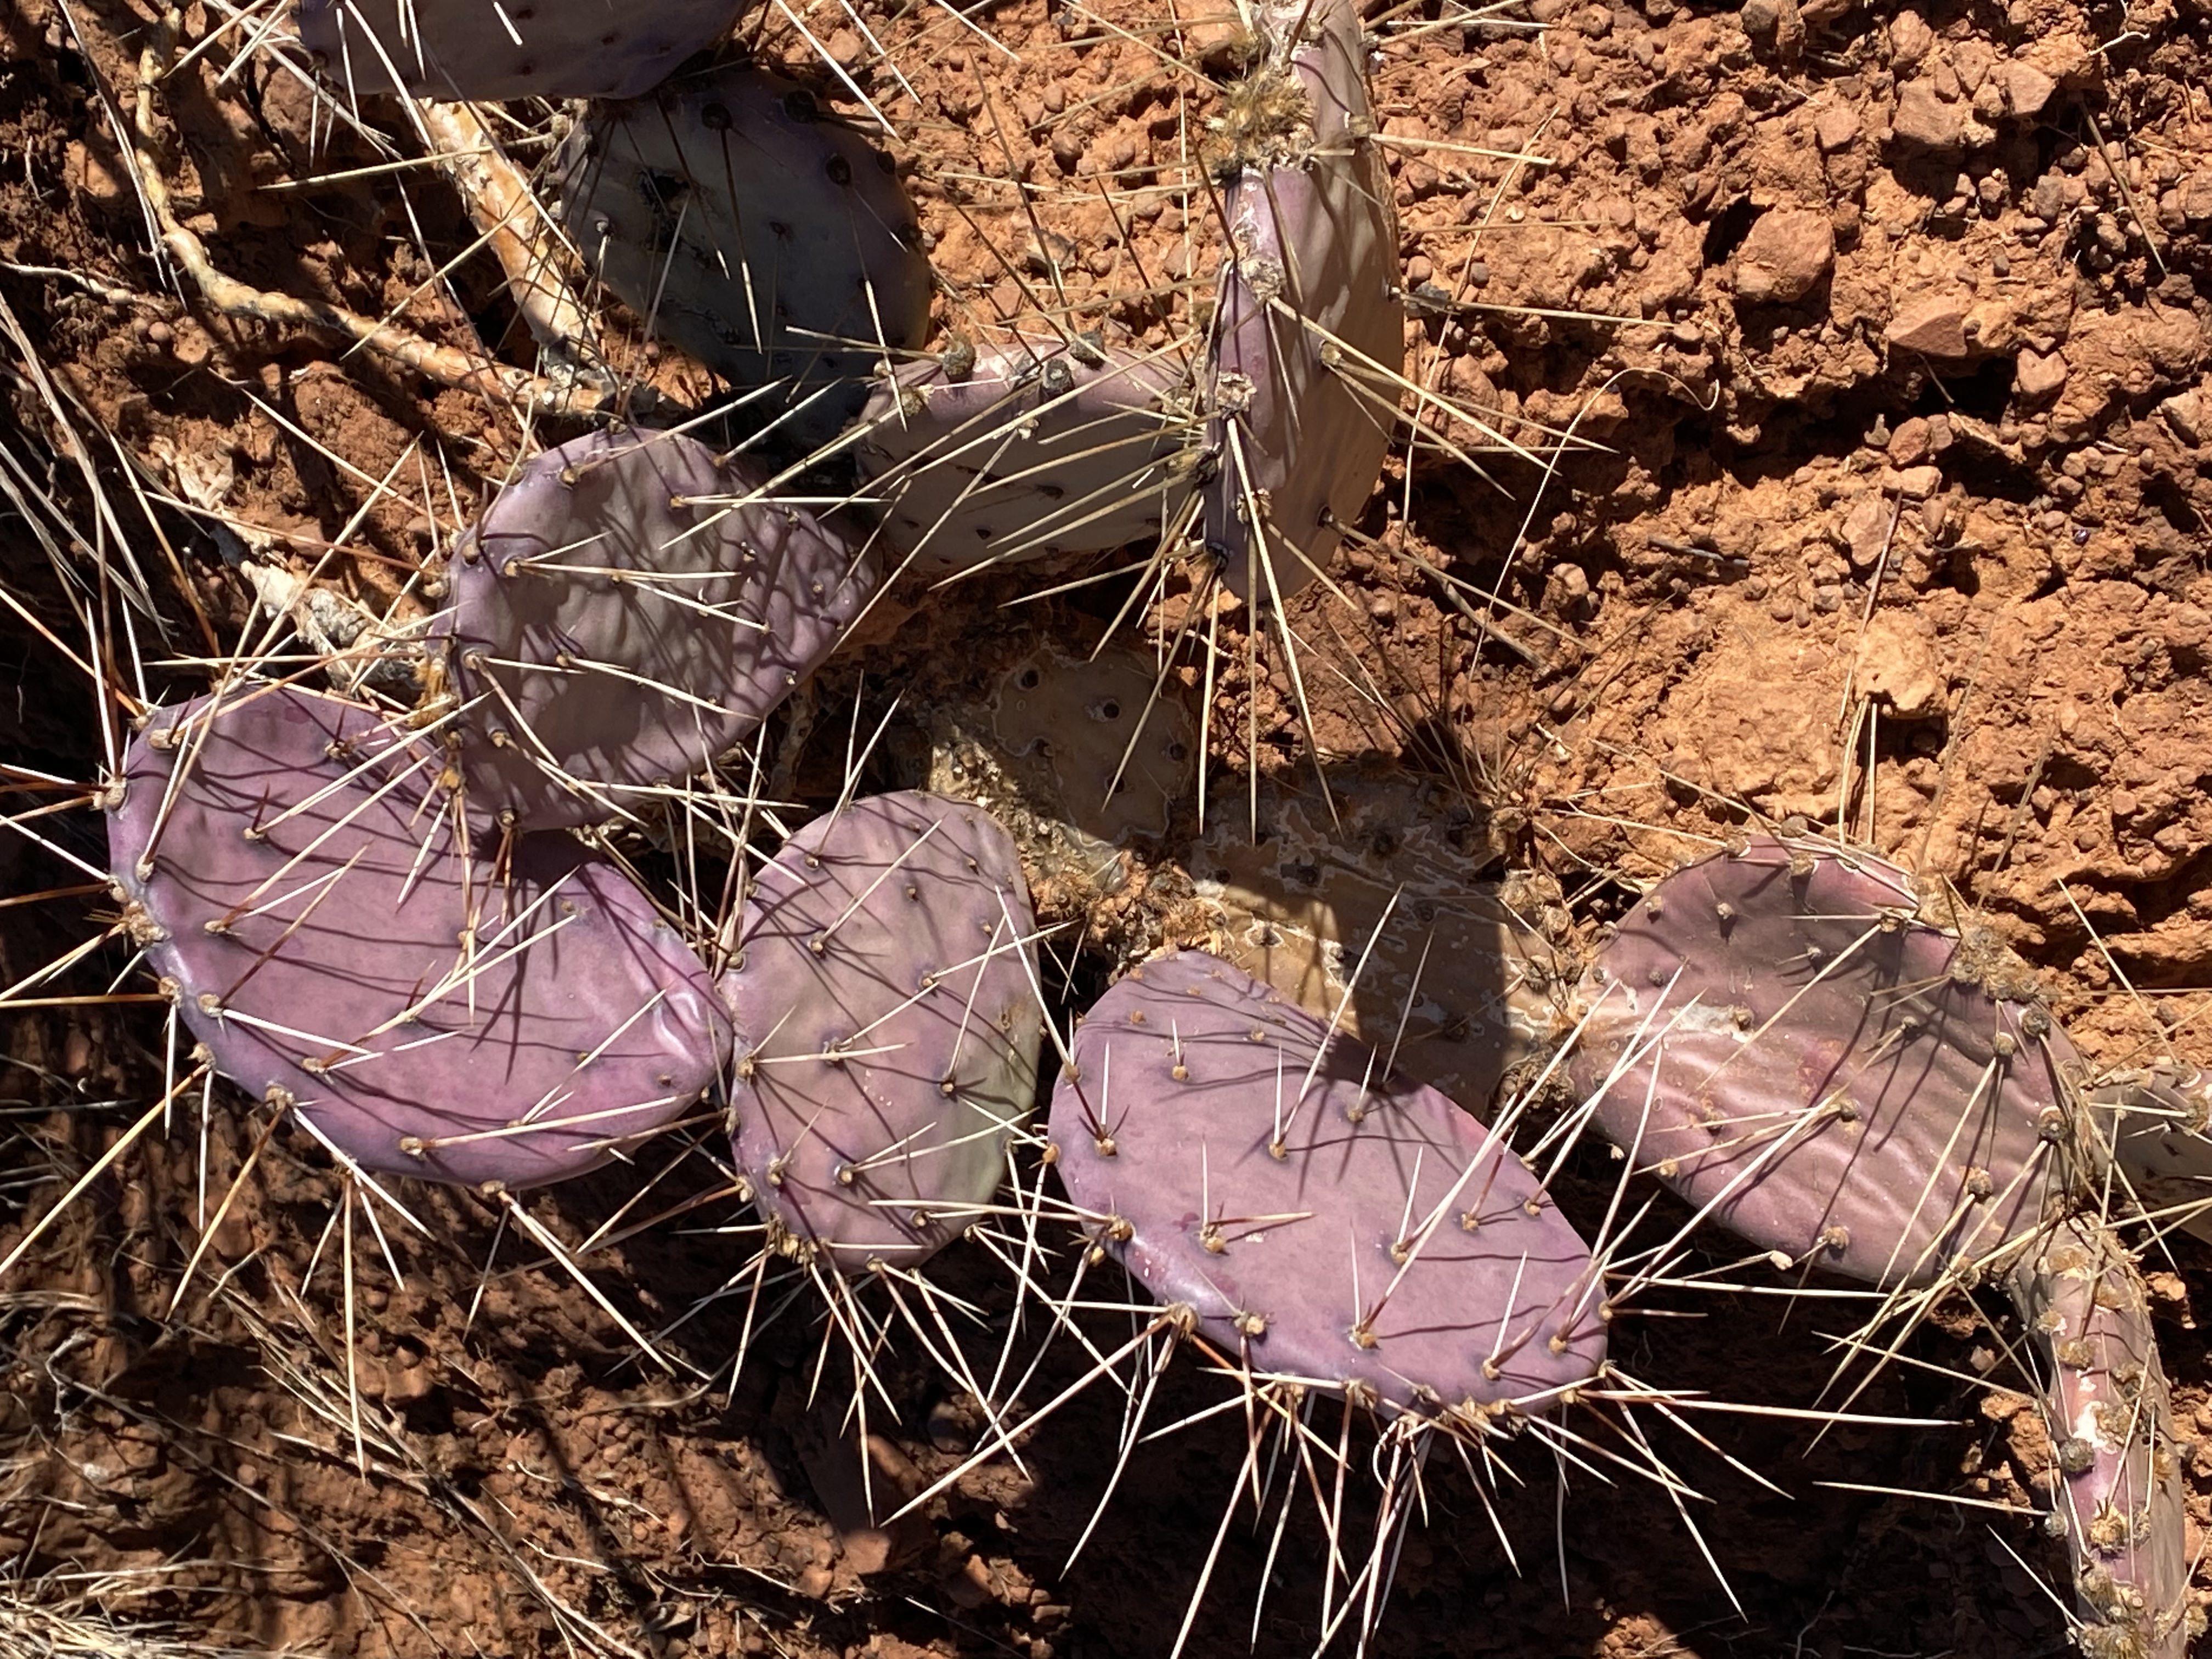 arizona cactus